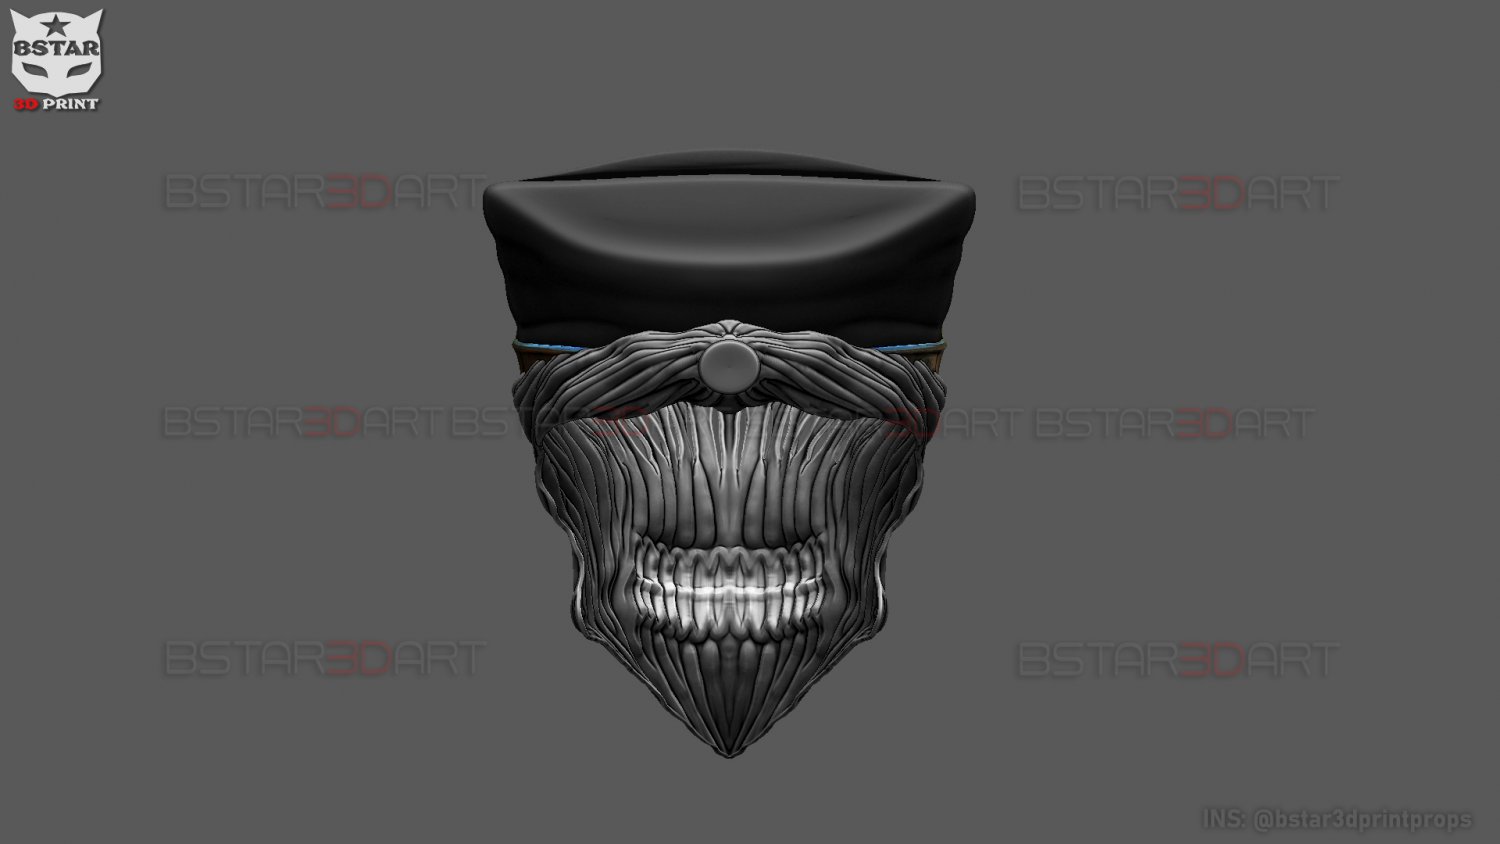 Chainsaw Man Cosplay Helmet - Katana Man - Halloween Costume 3D model 3D  printable